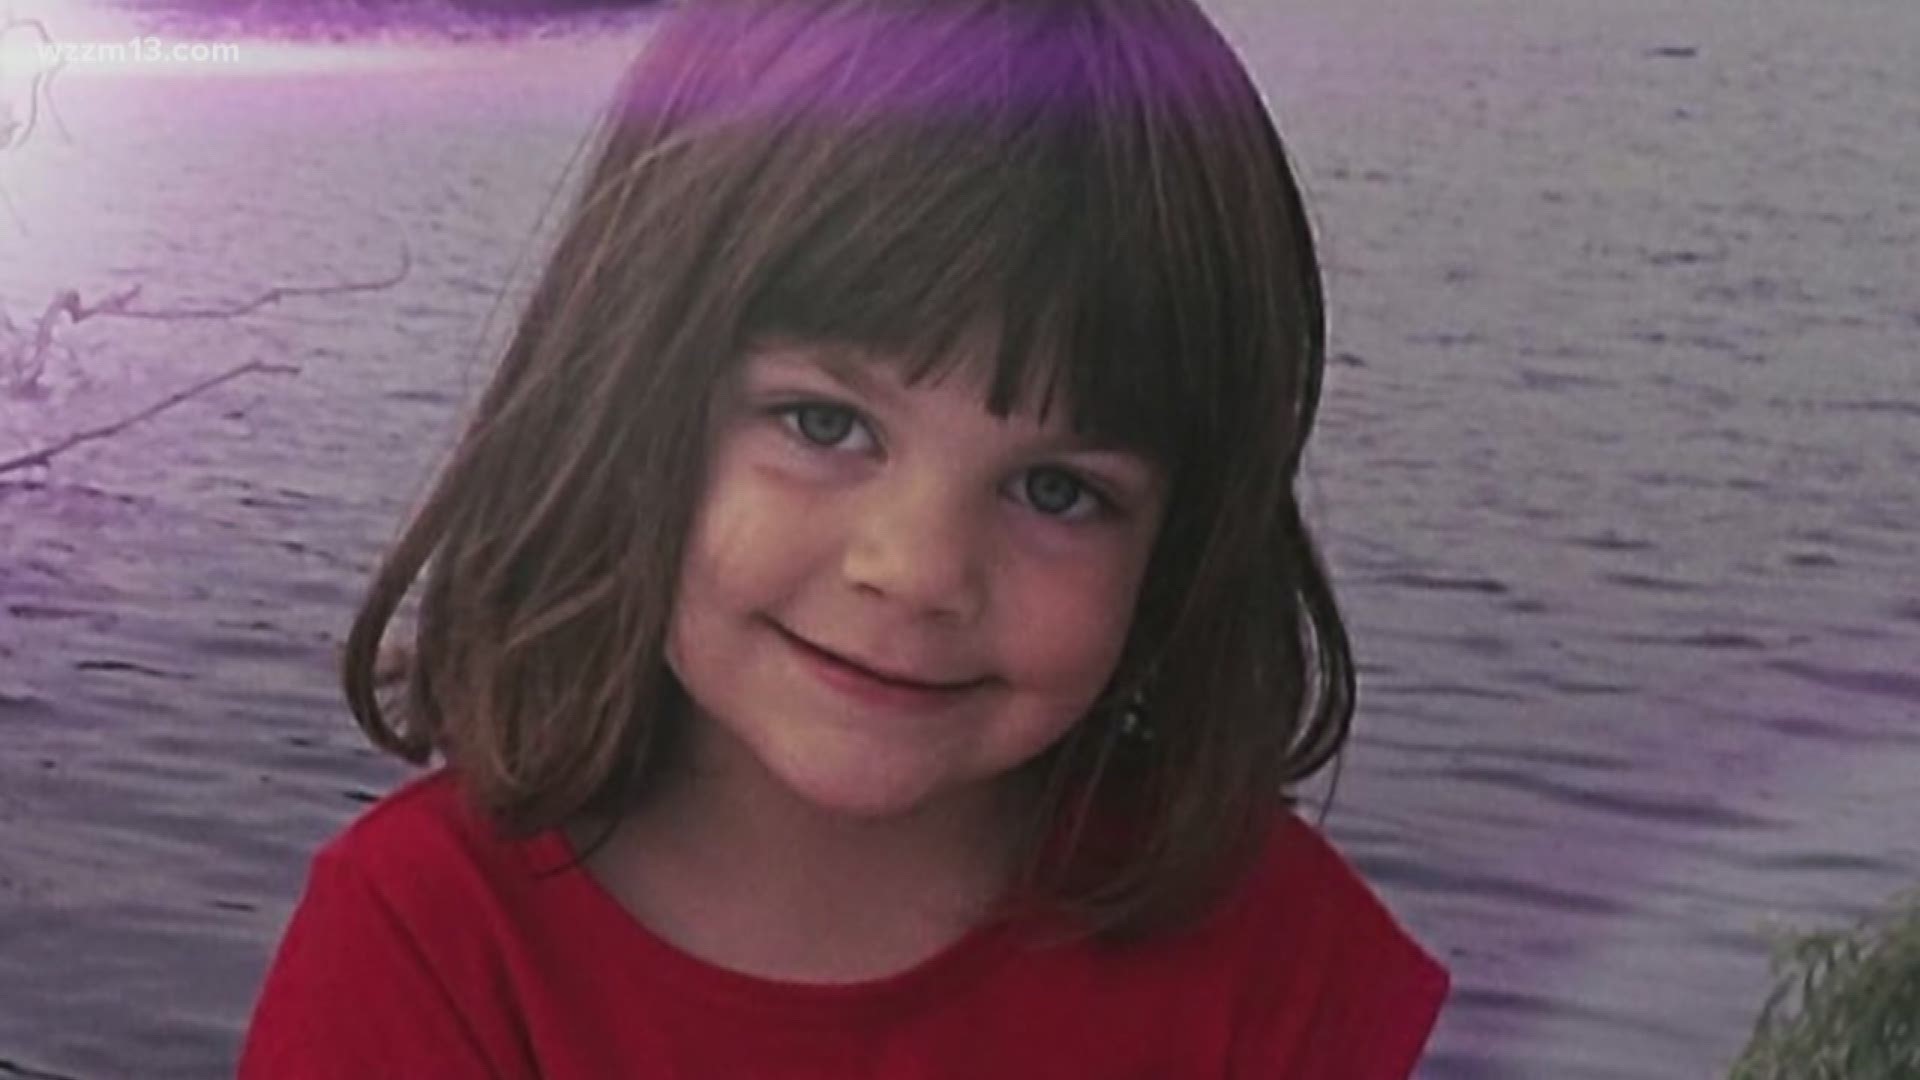 Michigan child murder follow-up